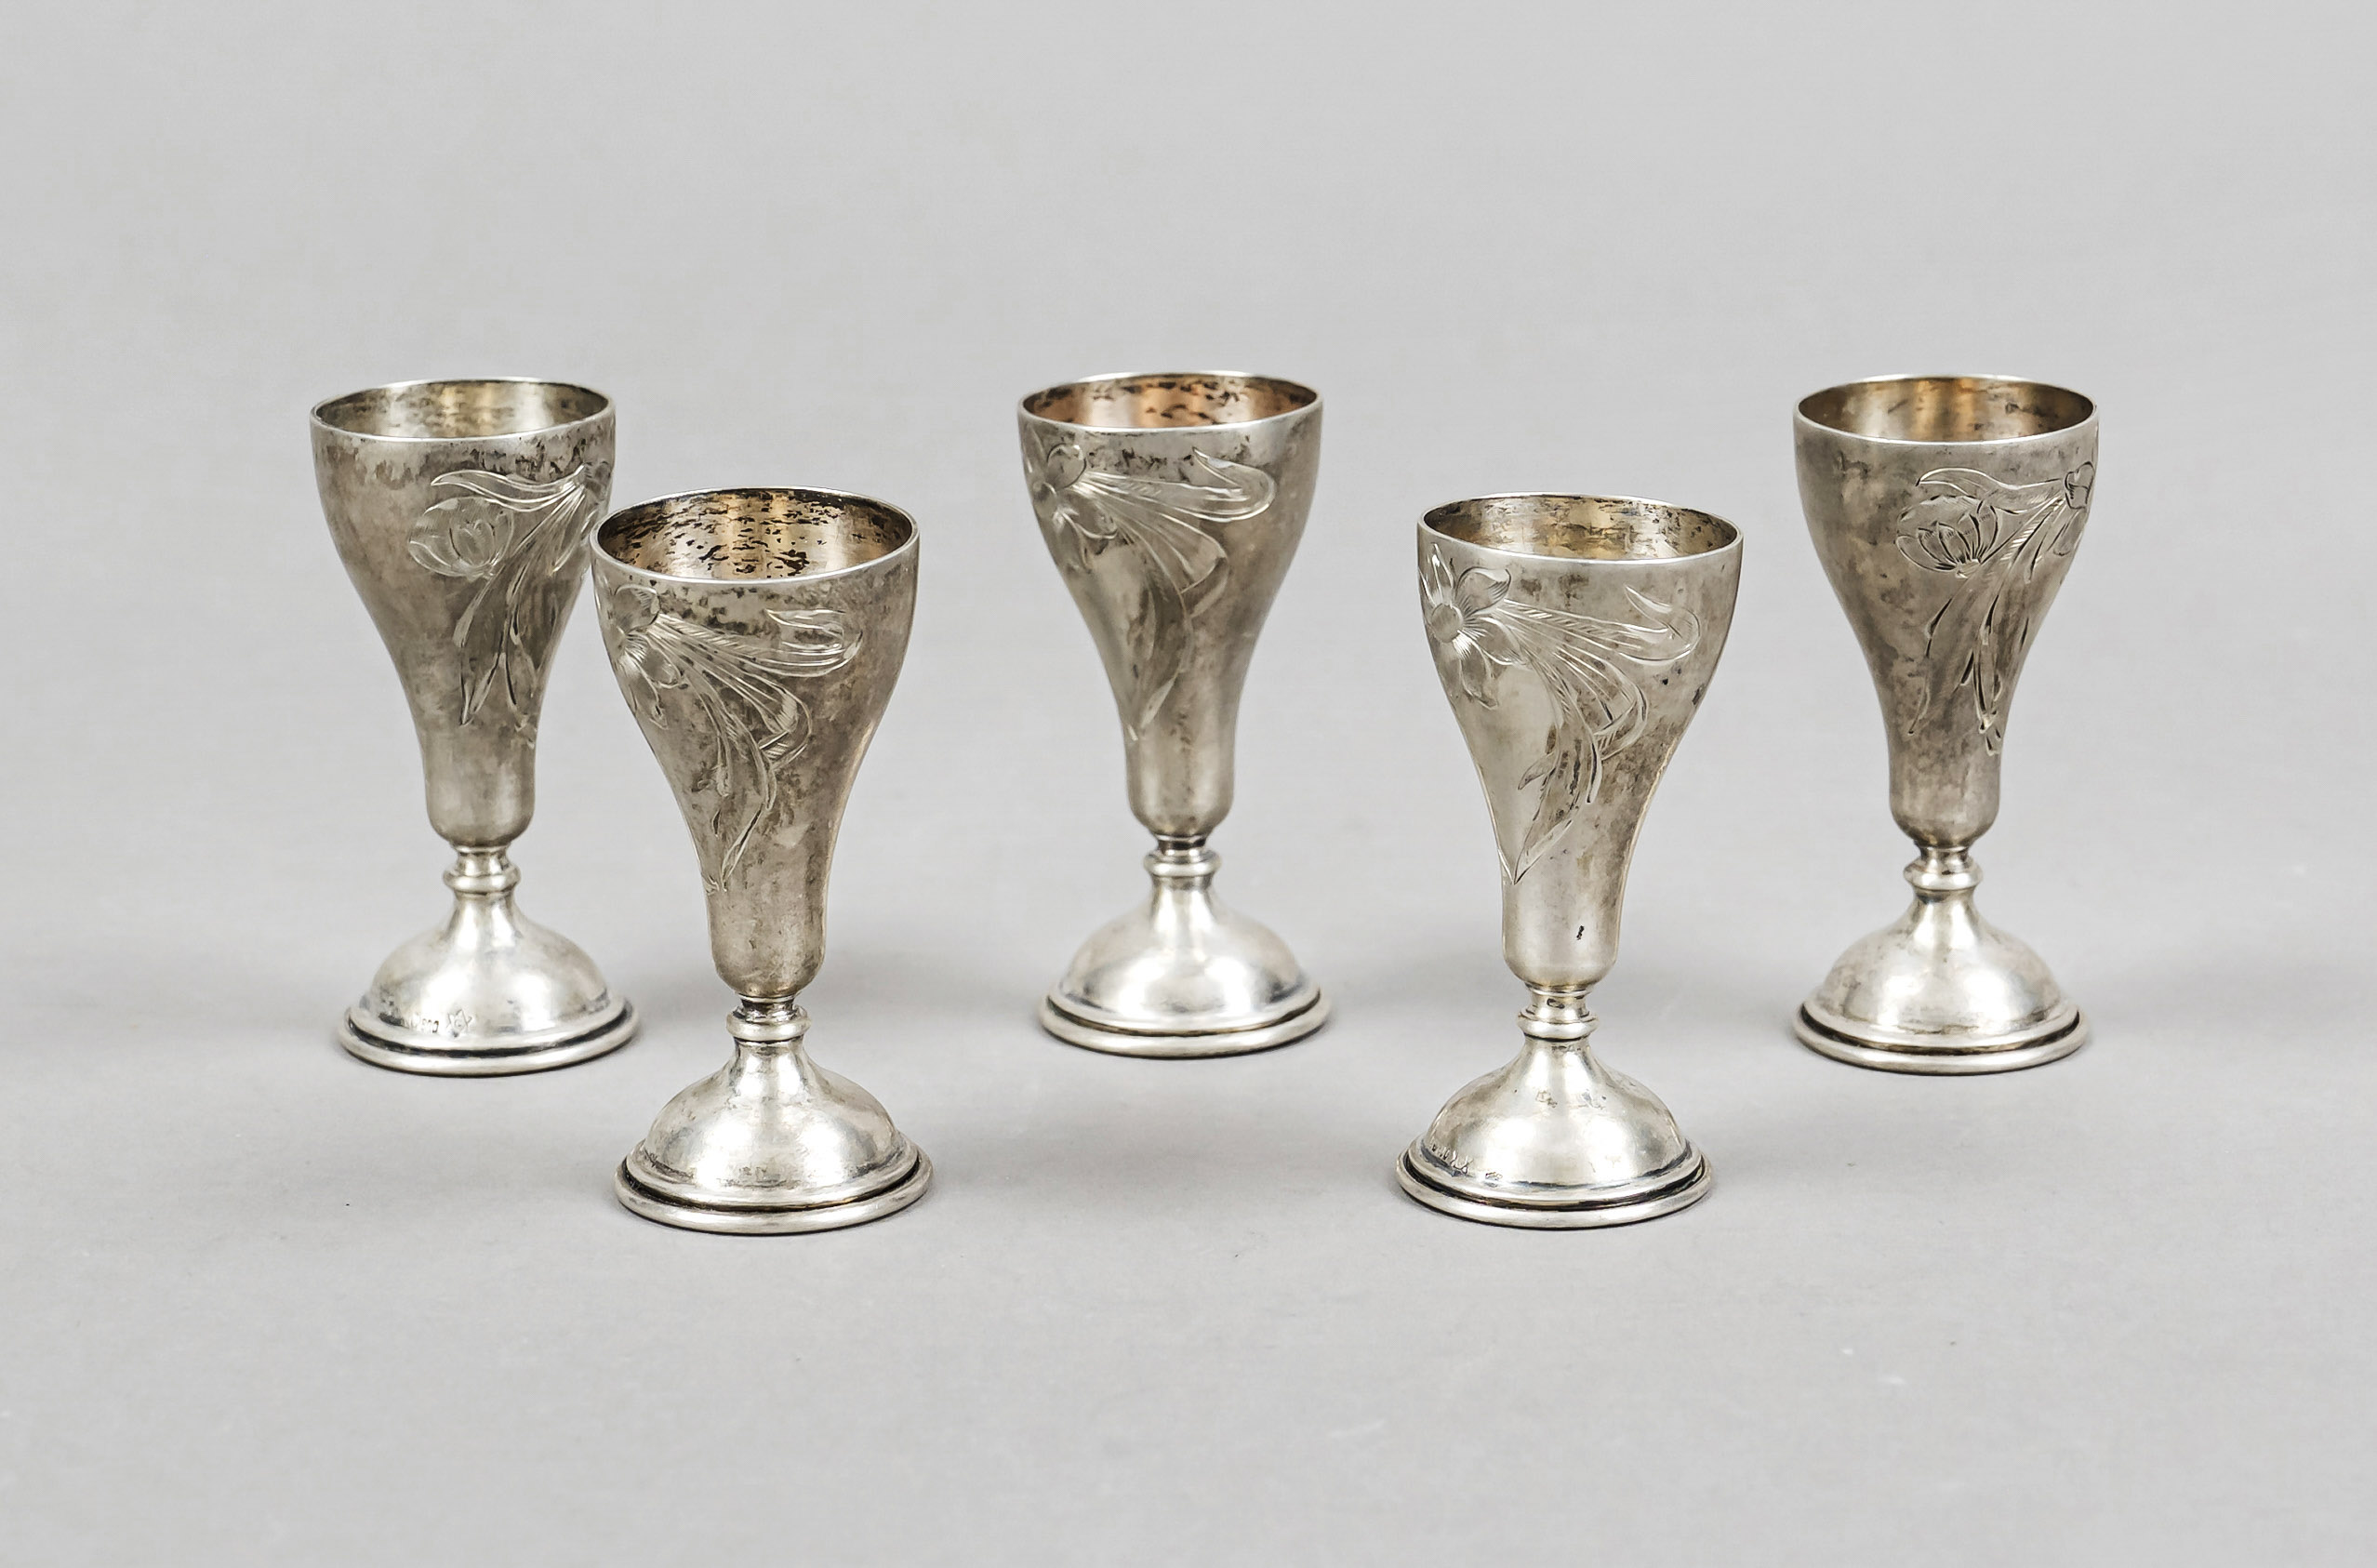 Five schnapps goblets, German, c. 1900, master's mark Jakob Grimminger, Schwäbisch Gmünd, silver